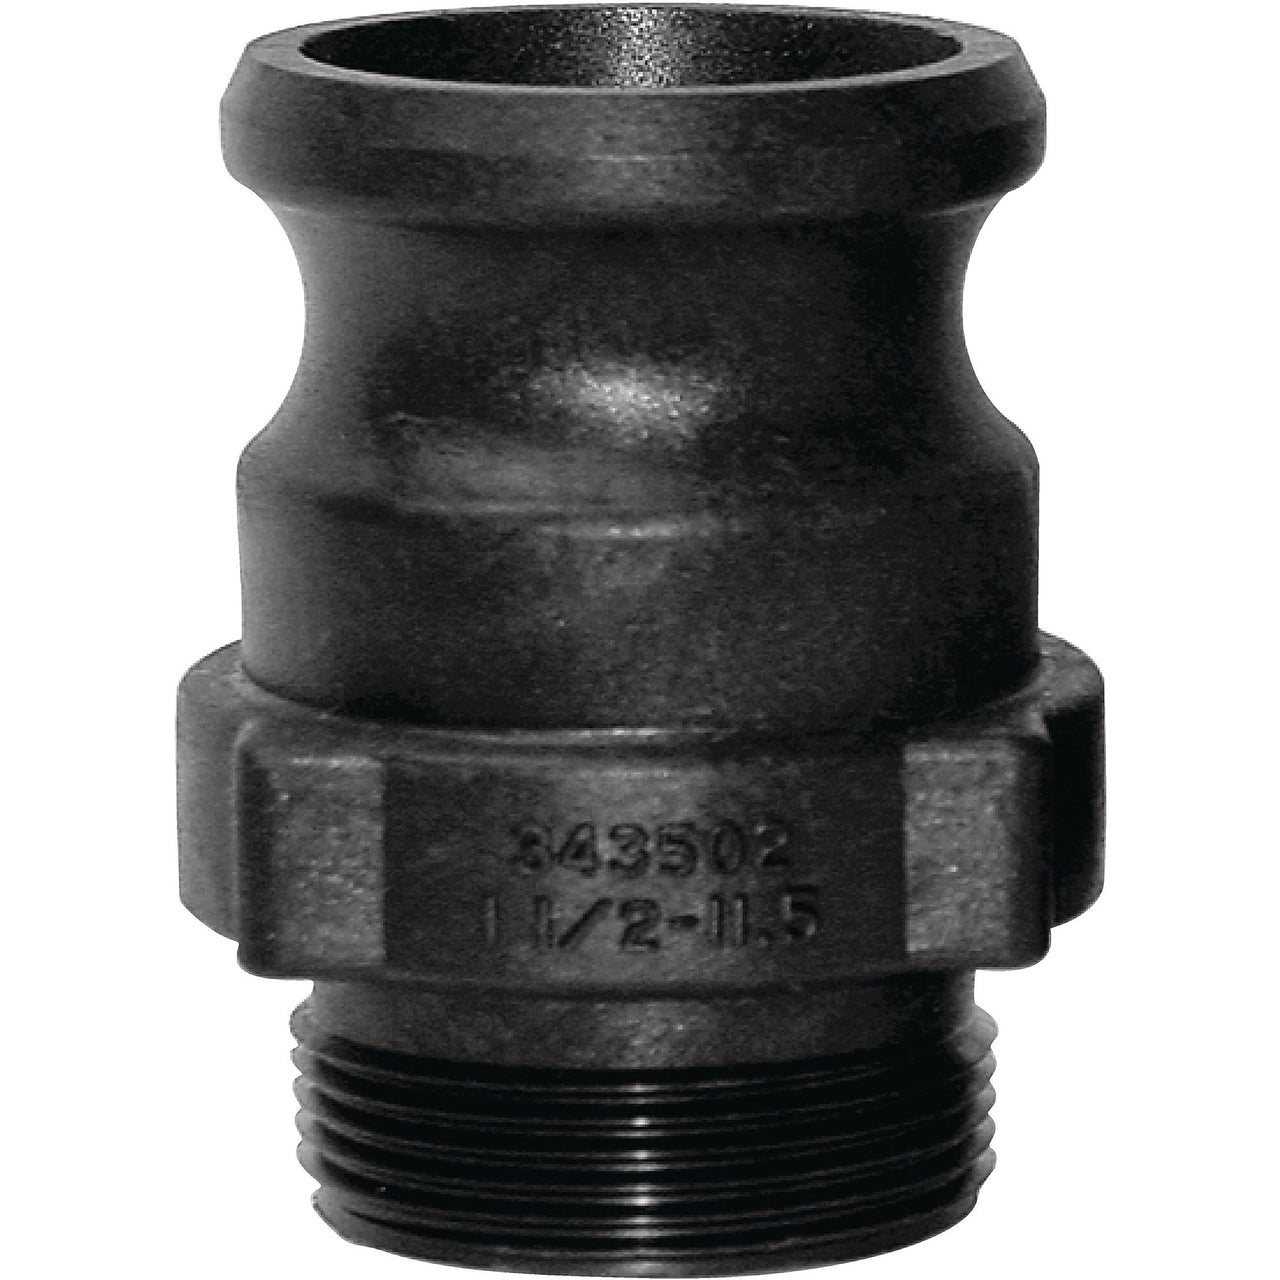 Sealand/Dometic NozAll Pump Out Adapter 1-1/2" 310343502 | 24